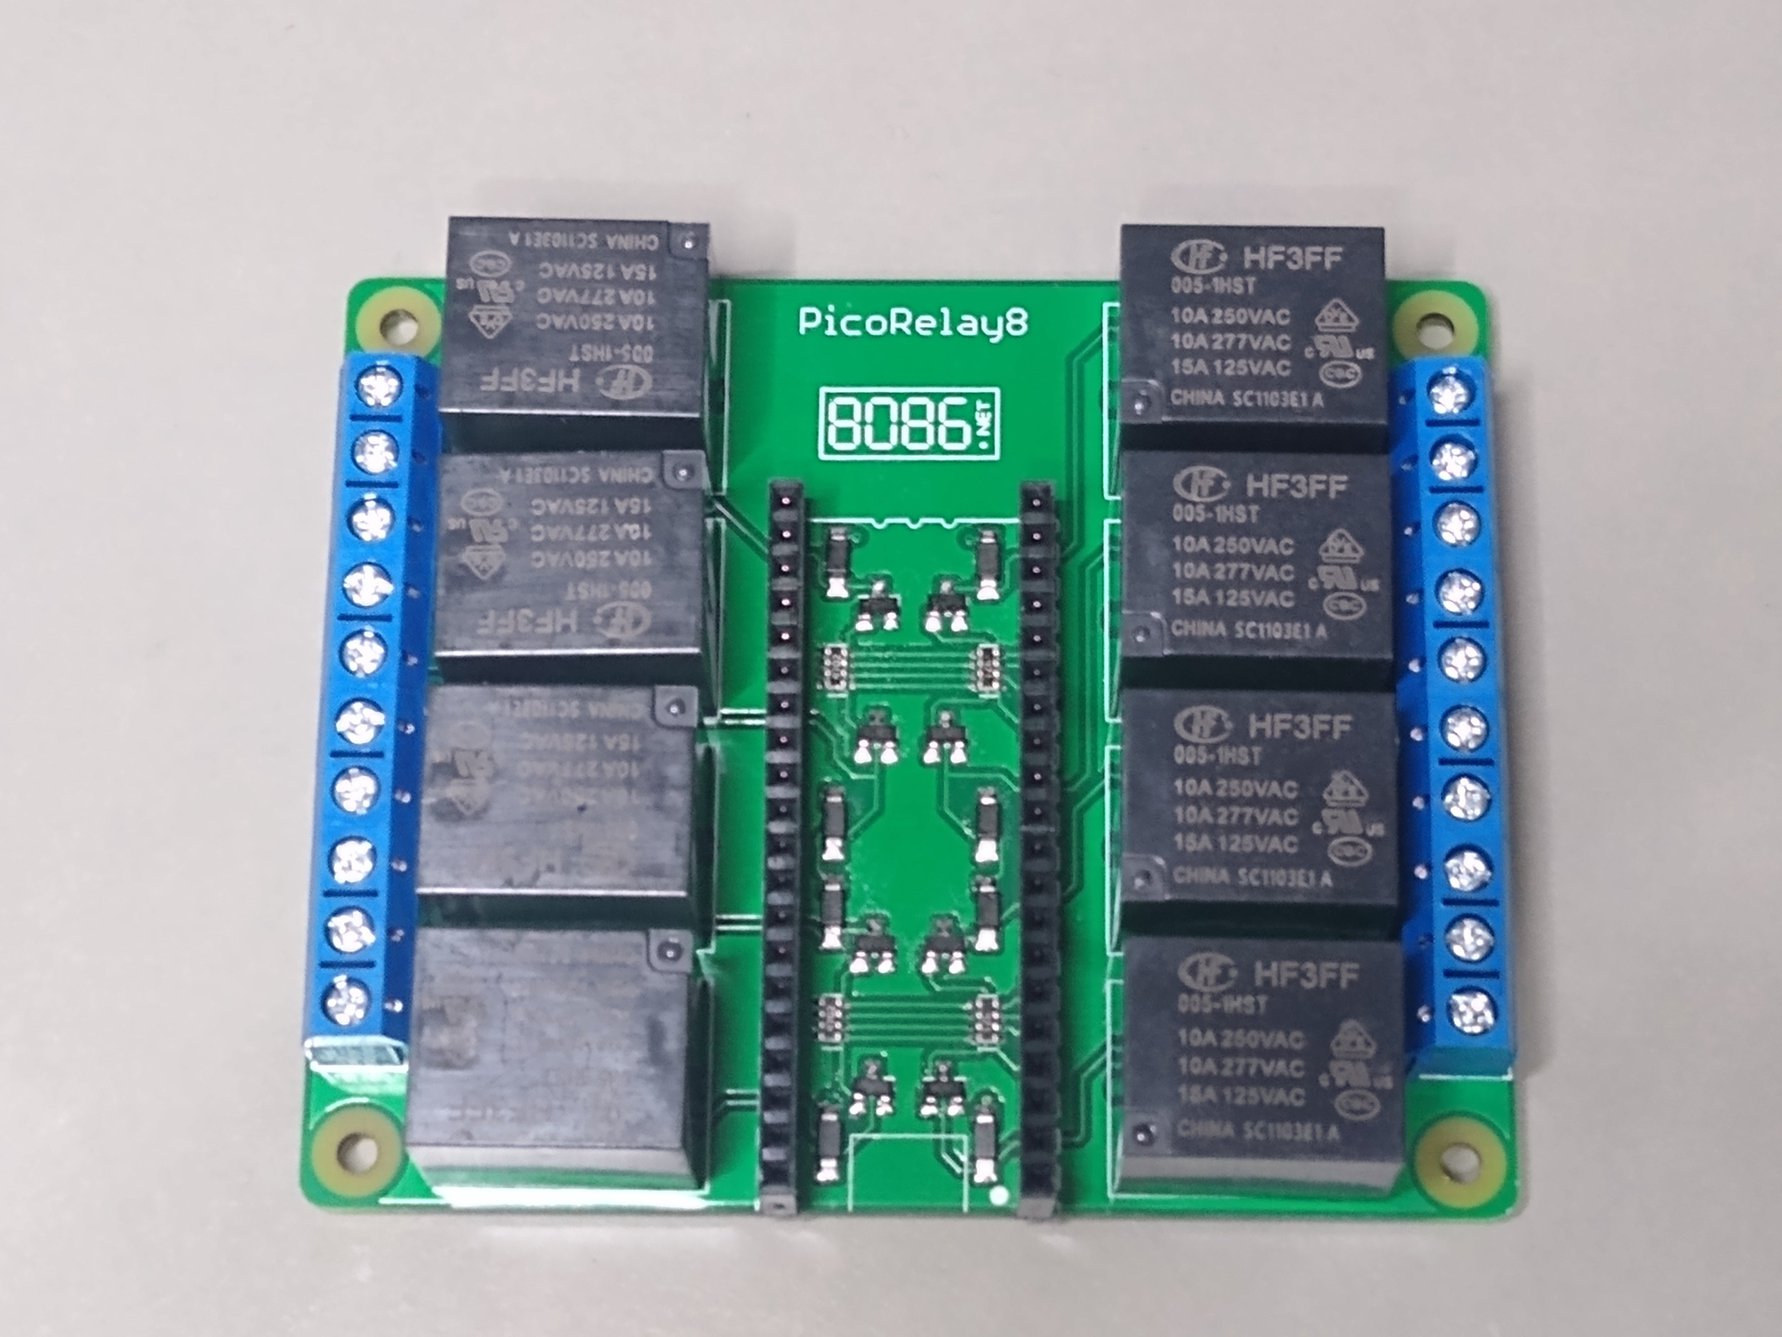 Raspberry Pi Relay module via GPIO - Raspberry Pi Automation